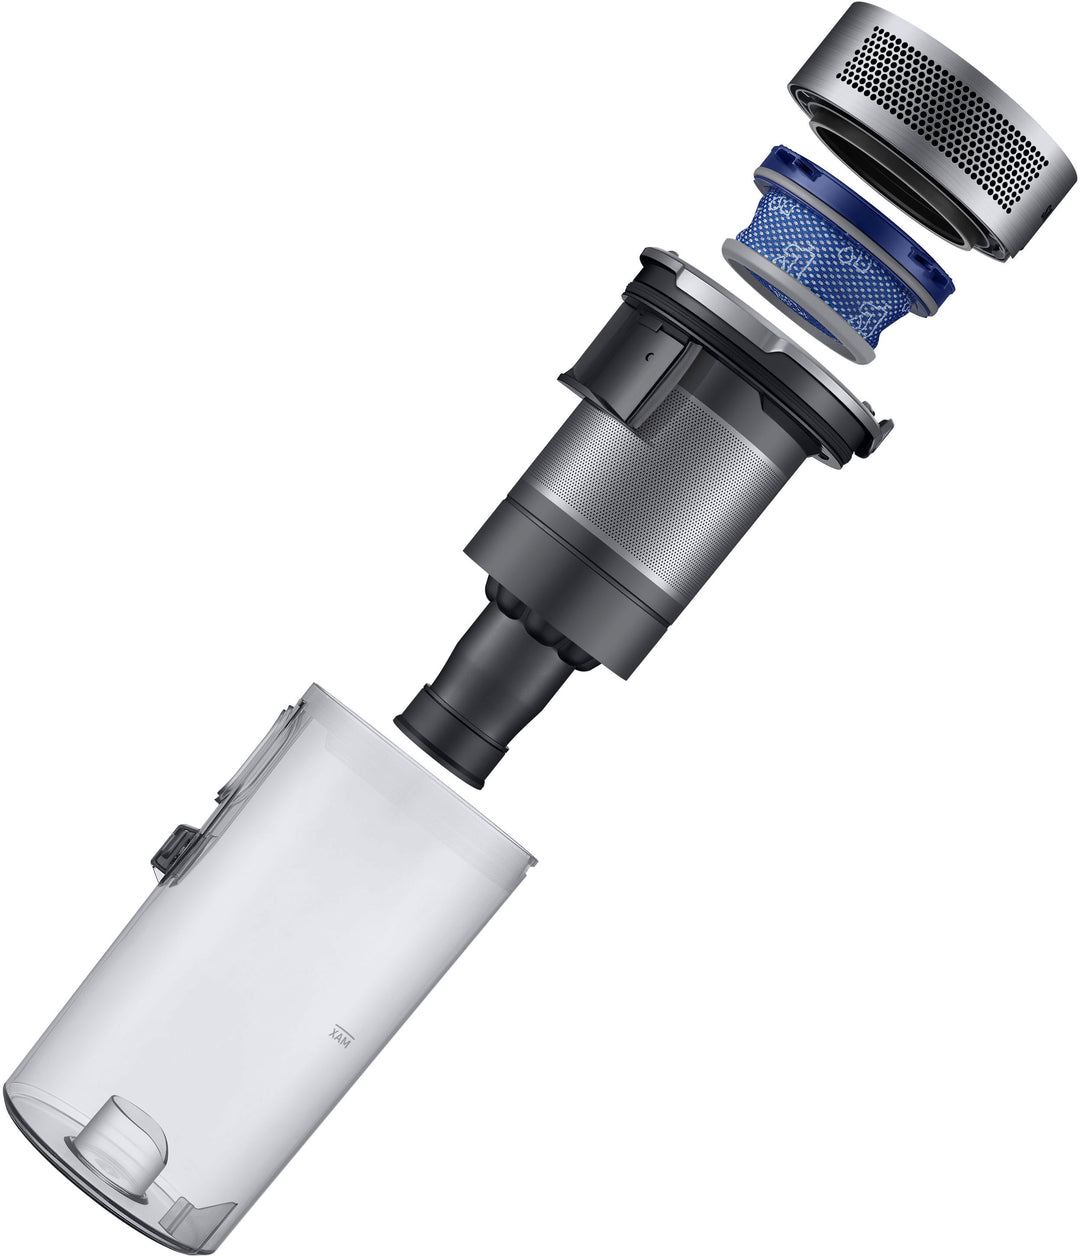 Samsung - Jet 75 Cordless Stick Vacuum - Titan ChroMetal_10